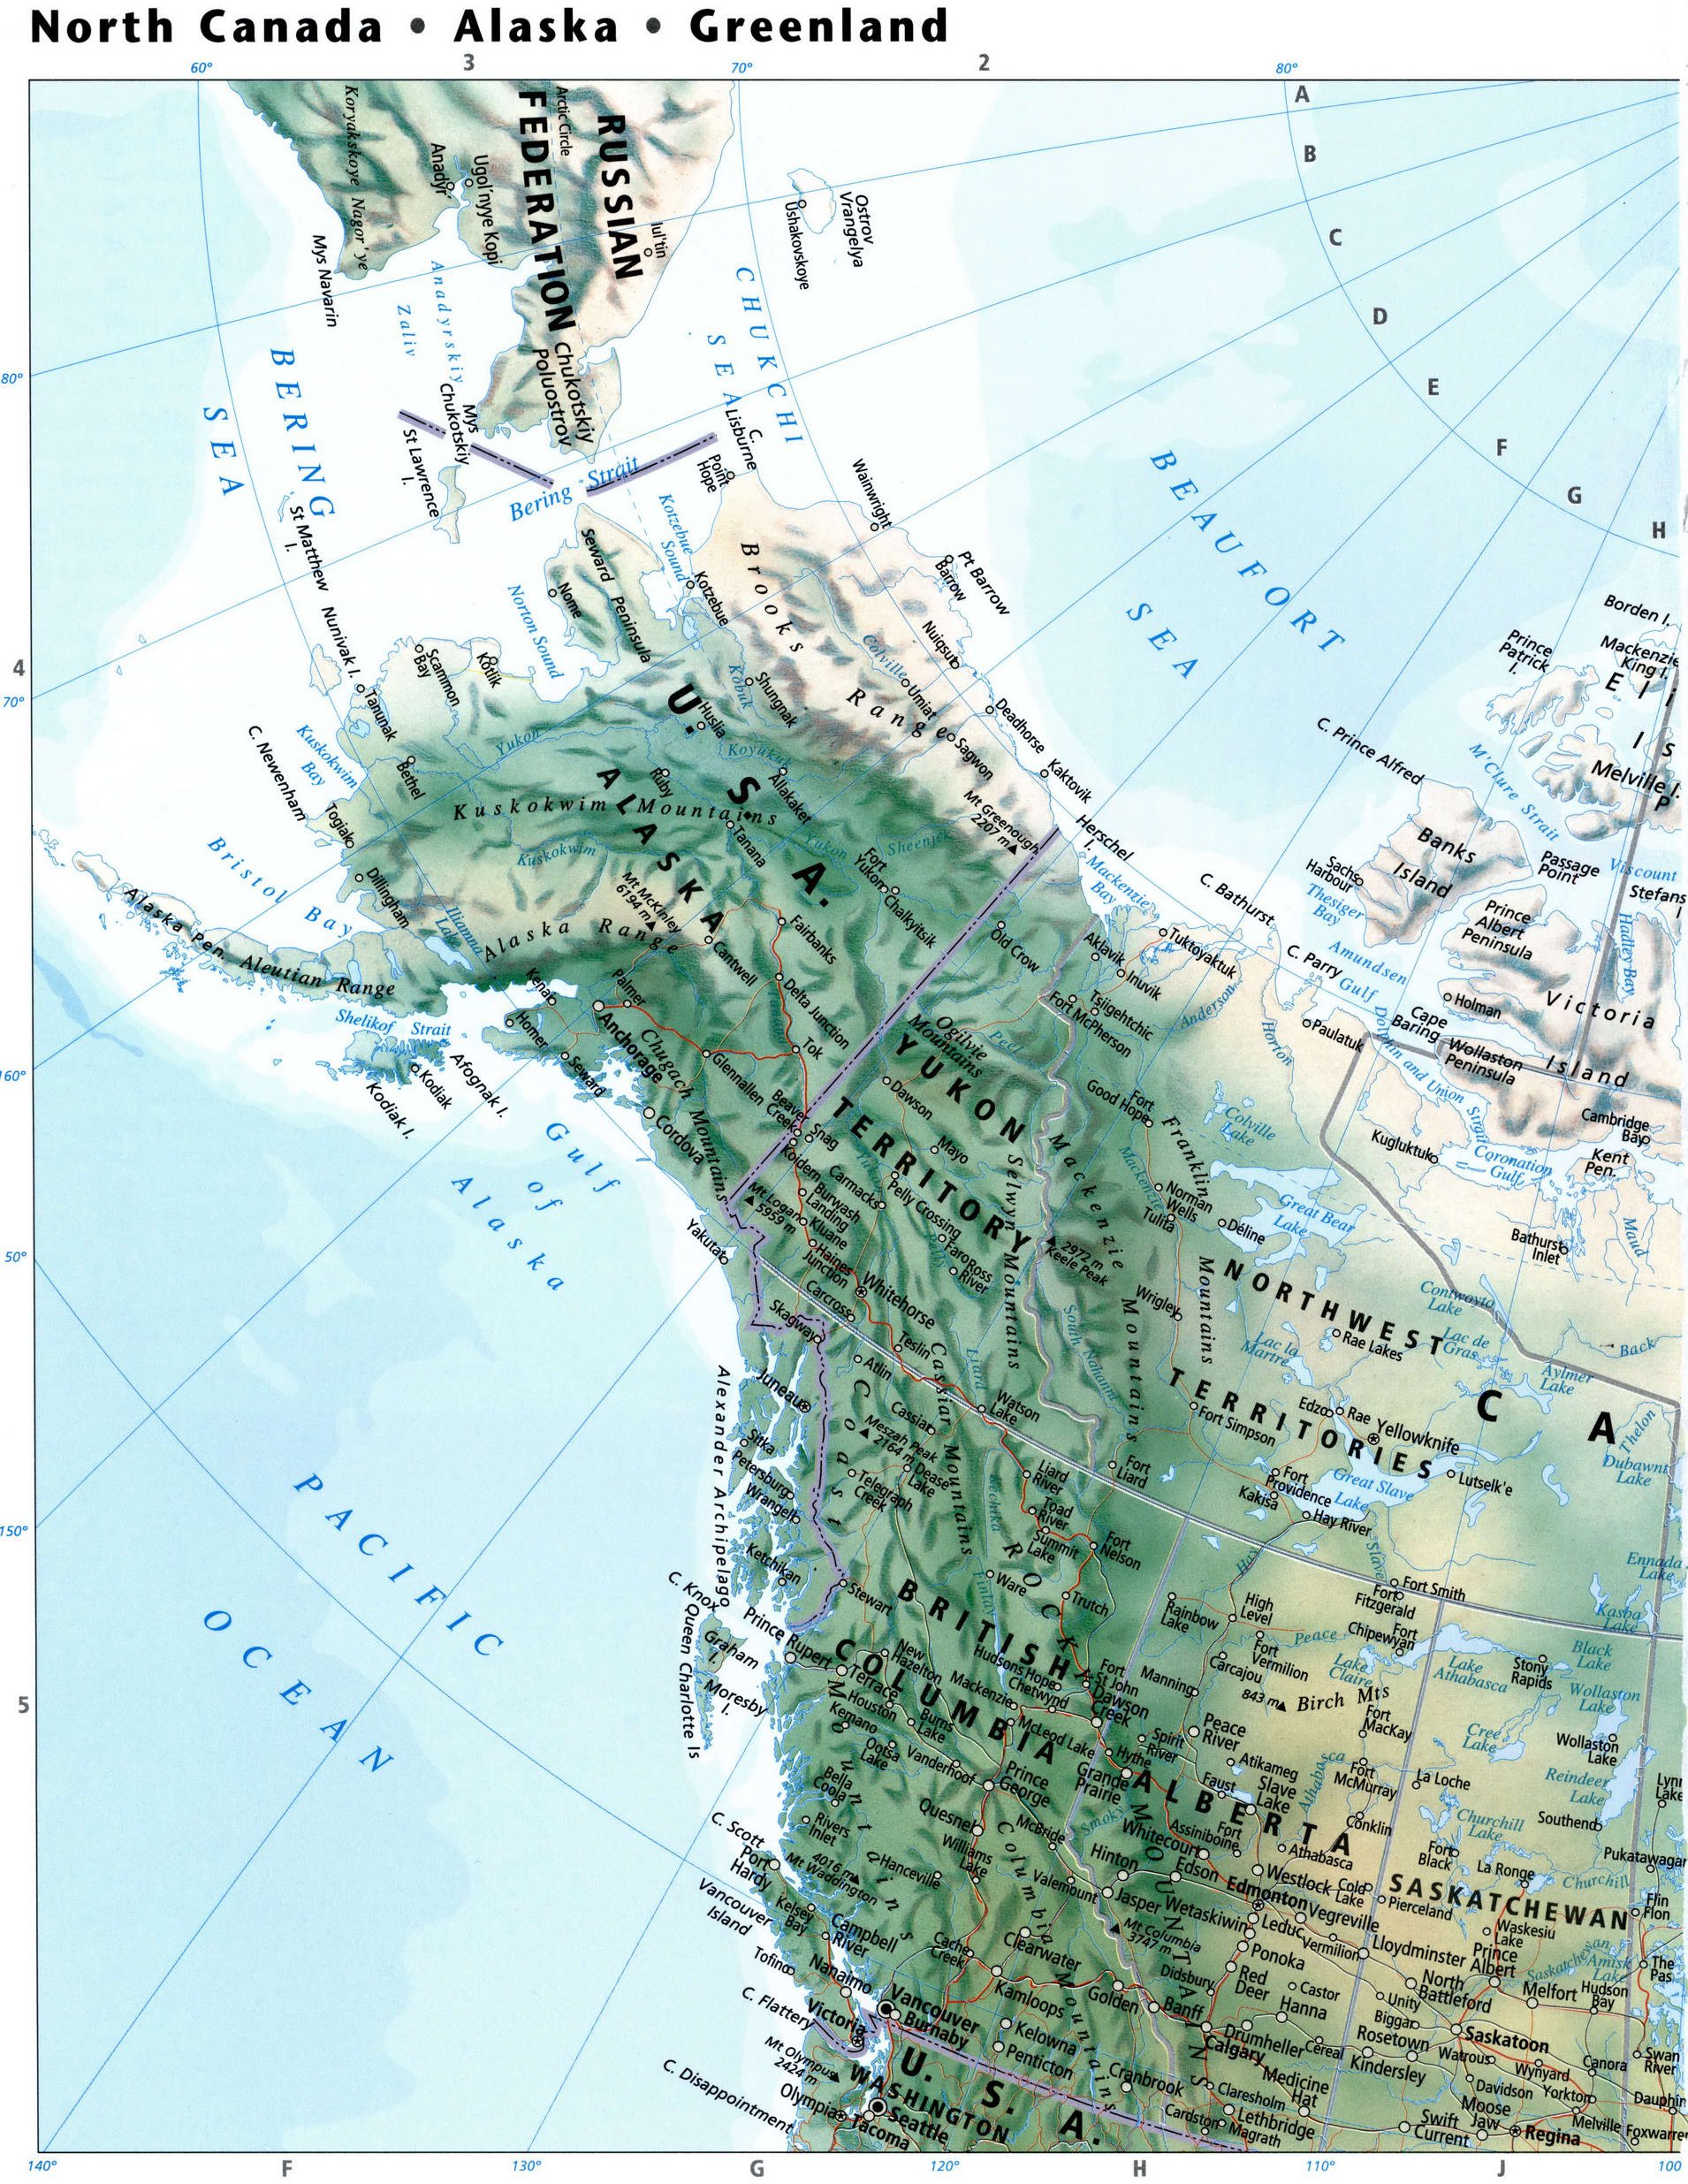 Notrh Canada and Alaska map